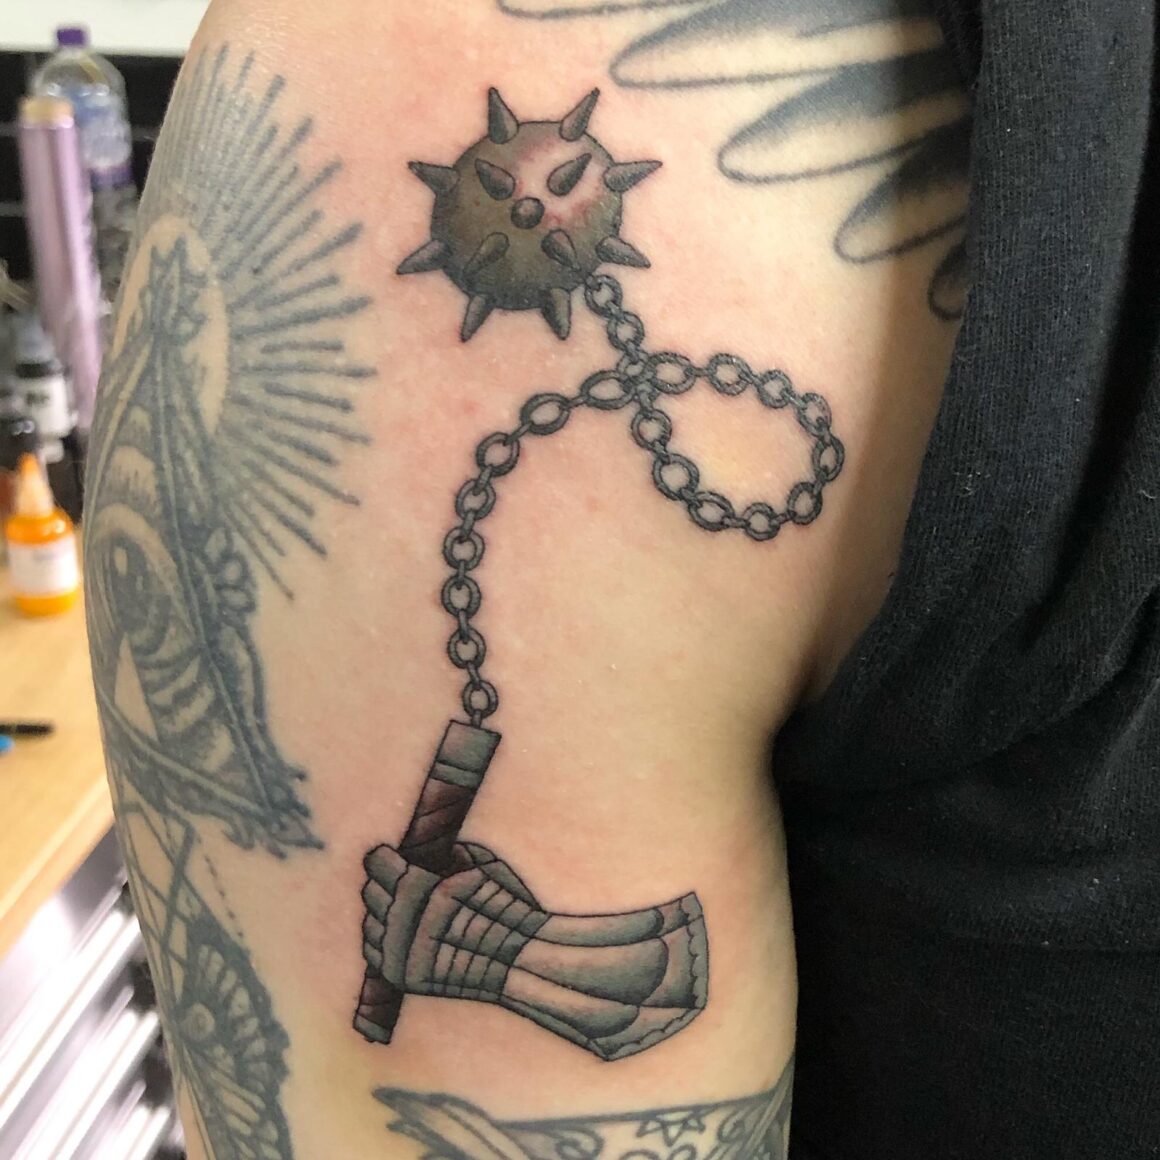 Thomas, Circle of Swords Tattoo Studio, Worcester (UK)